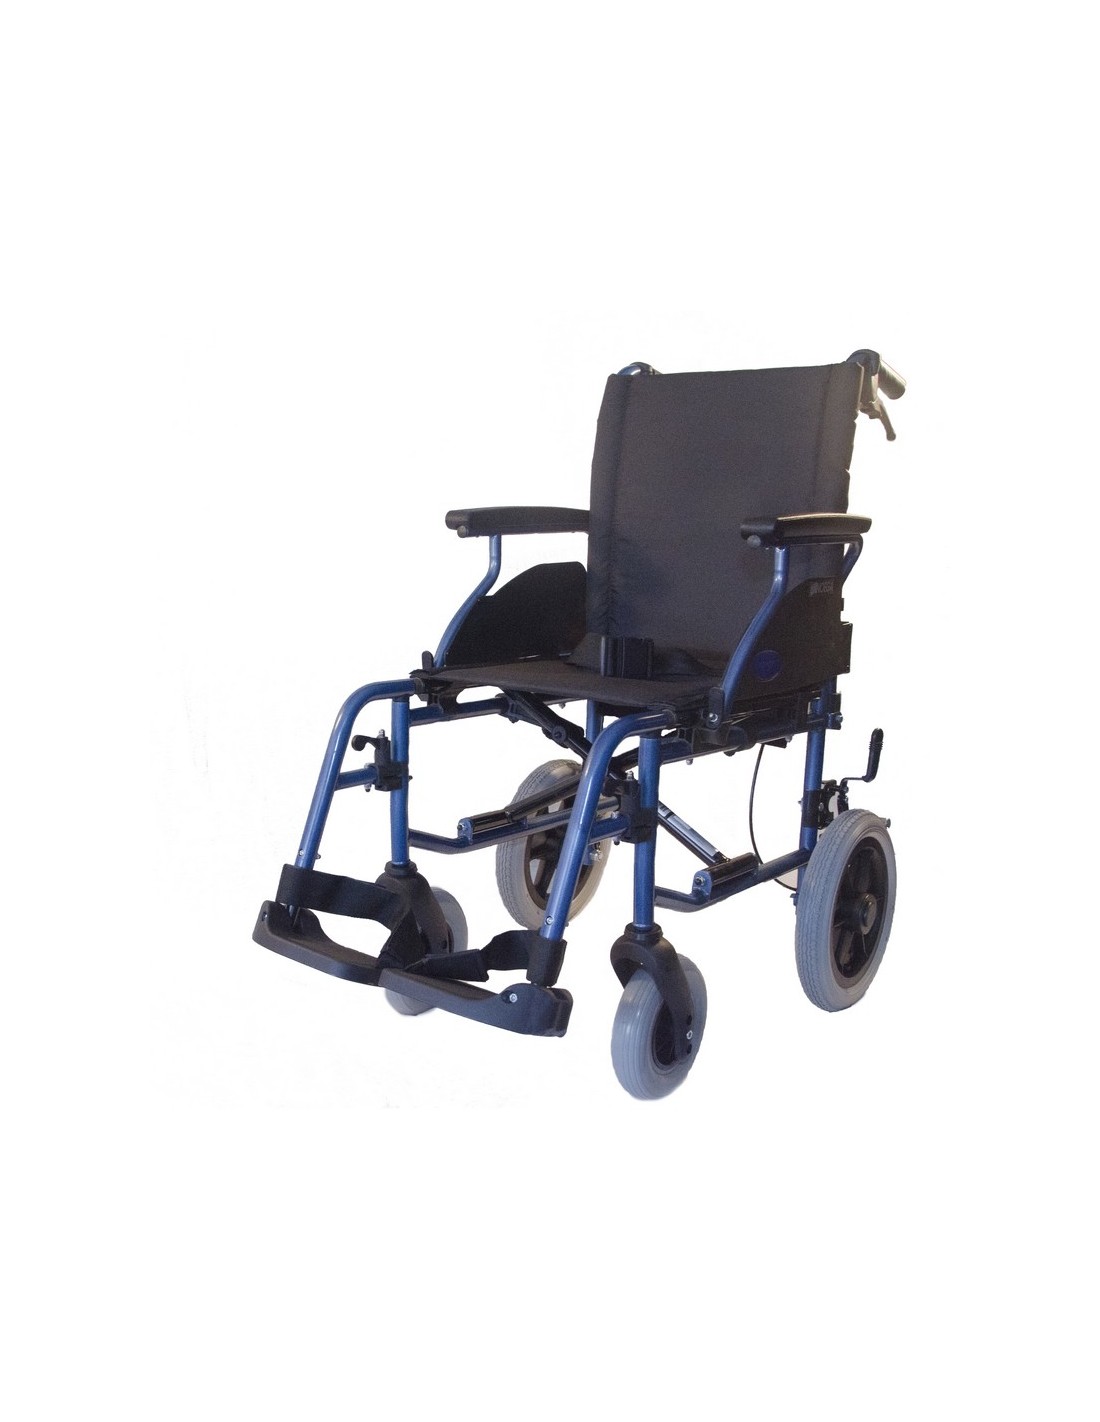 S12 Surace silla de ruedas plegable autopropulsada ligera